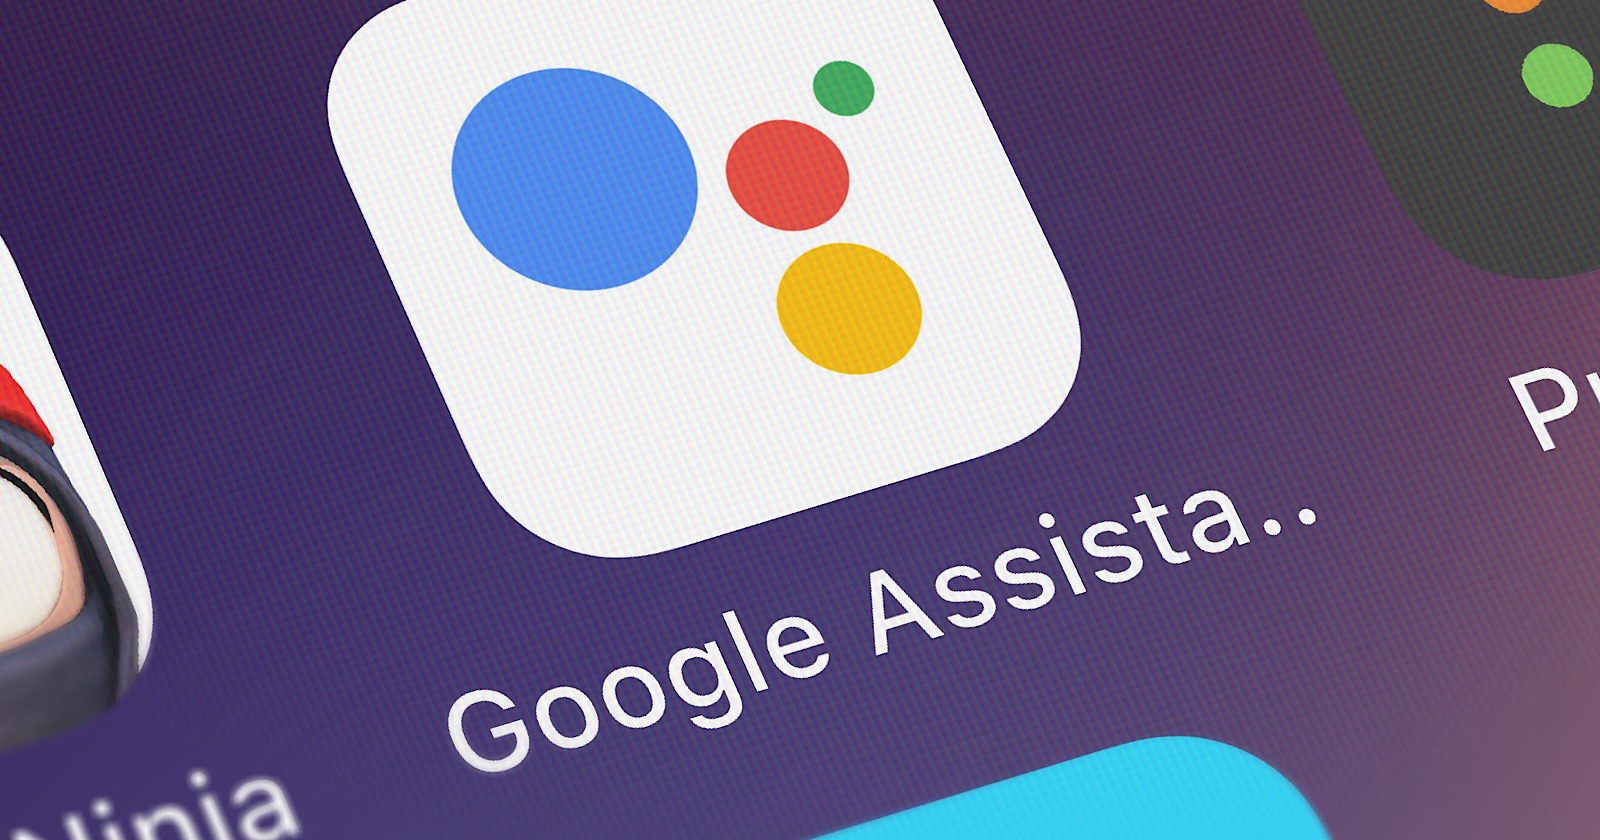 google assistant now has 500 million users worldwide via mattgsouthern